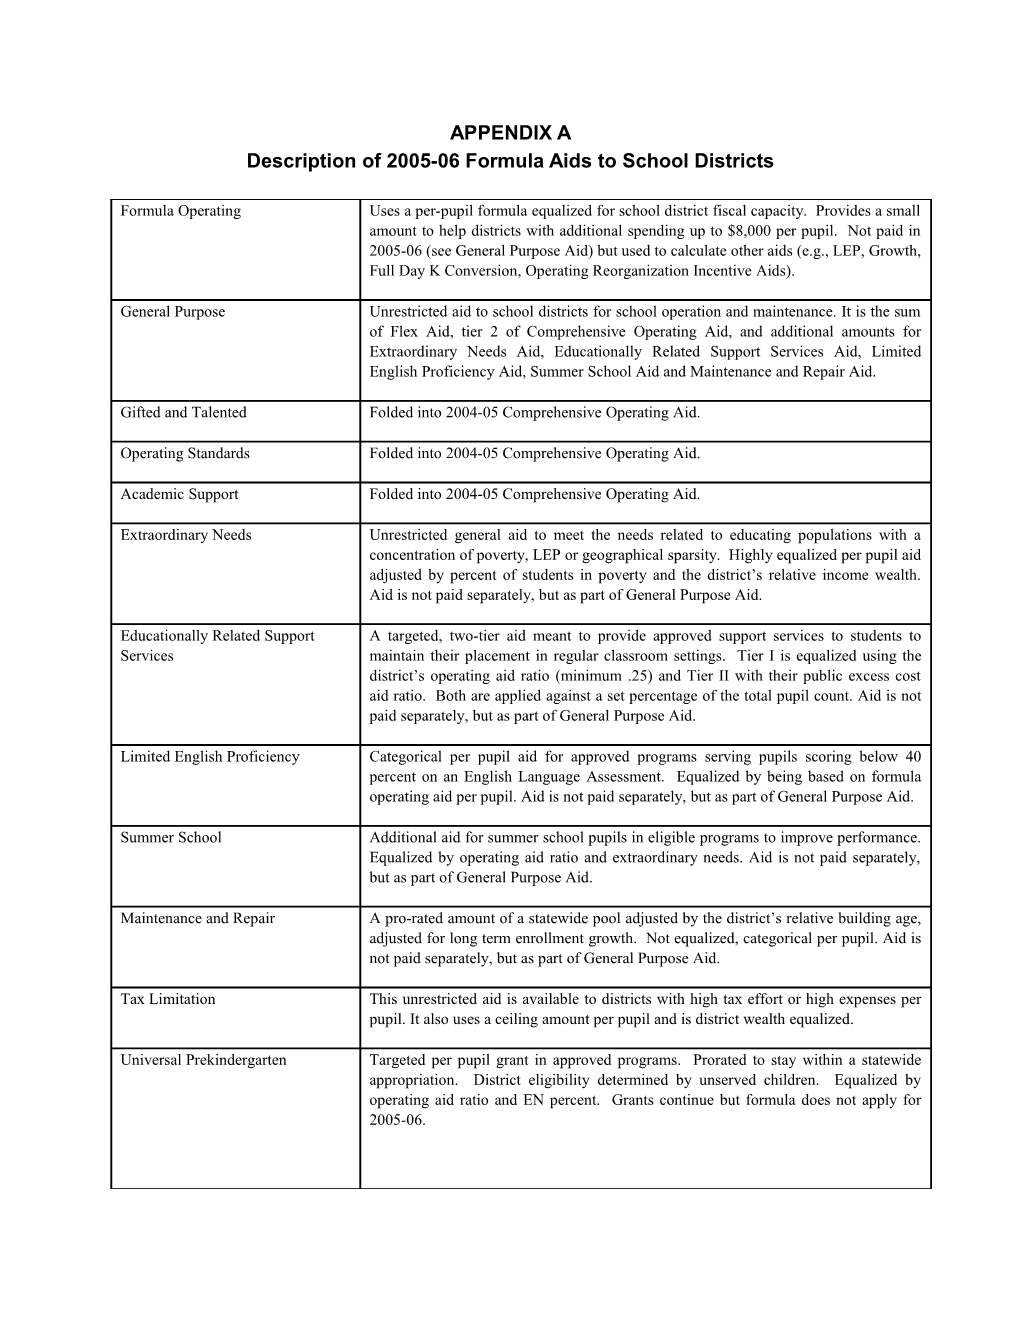 Description of 2005-06 Formula Aids to School Districts